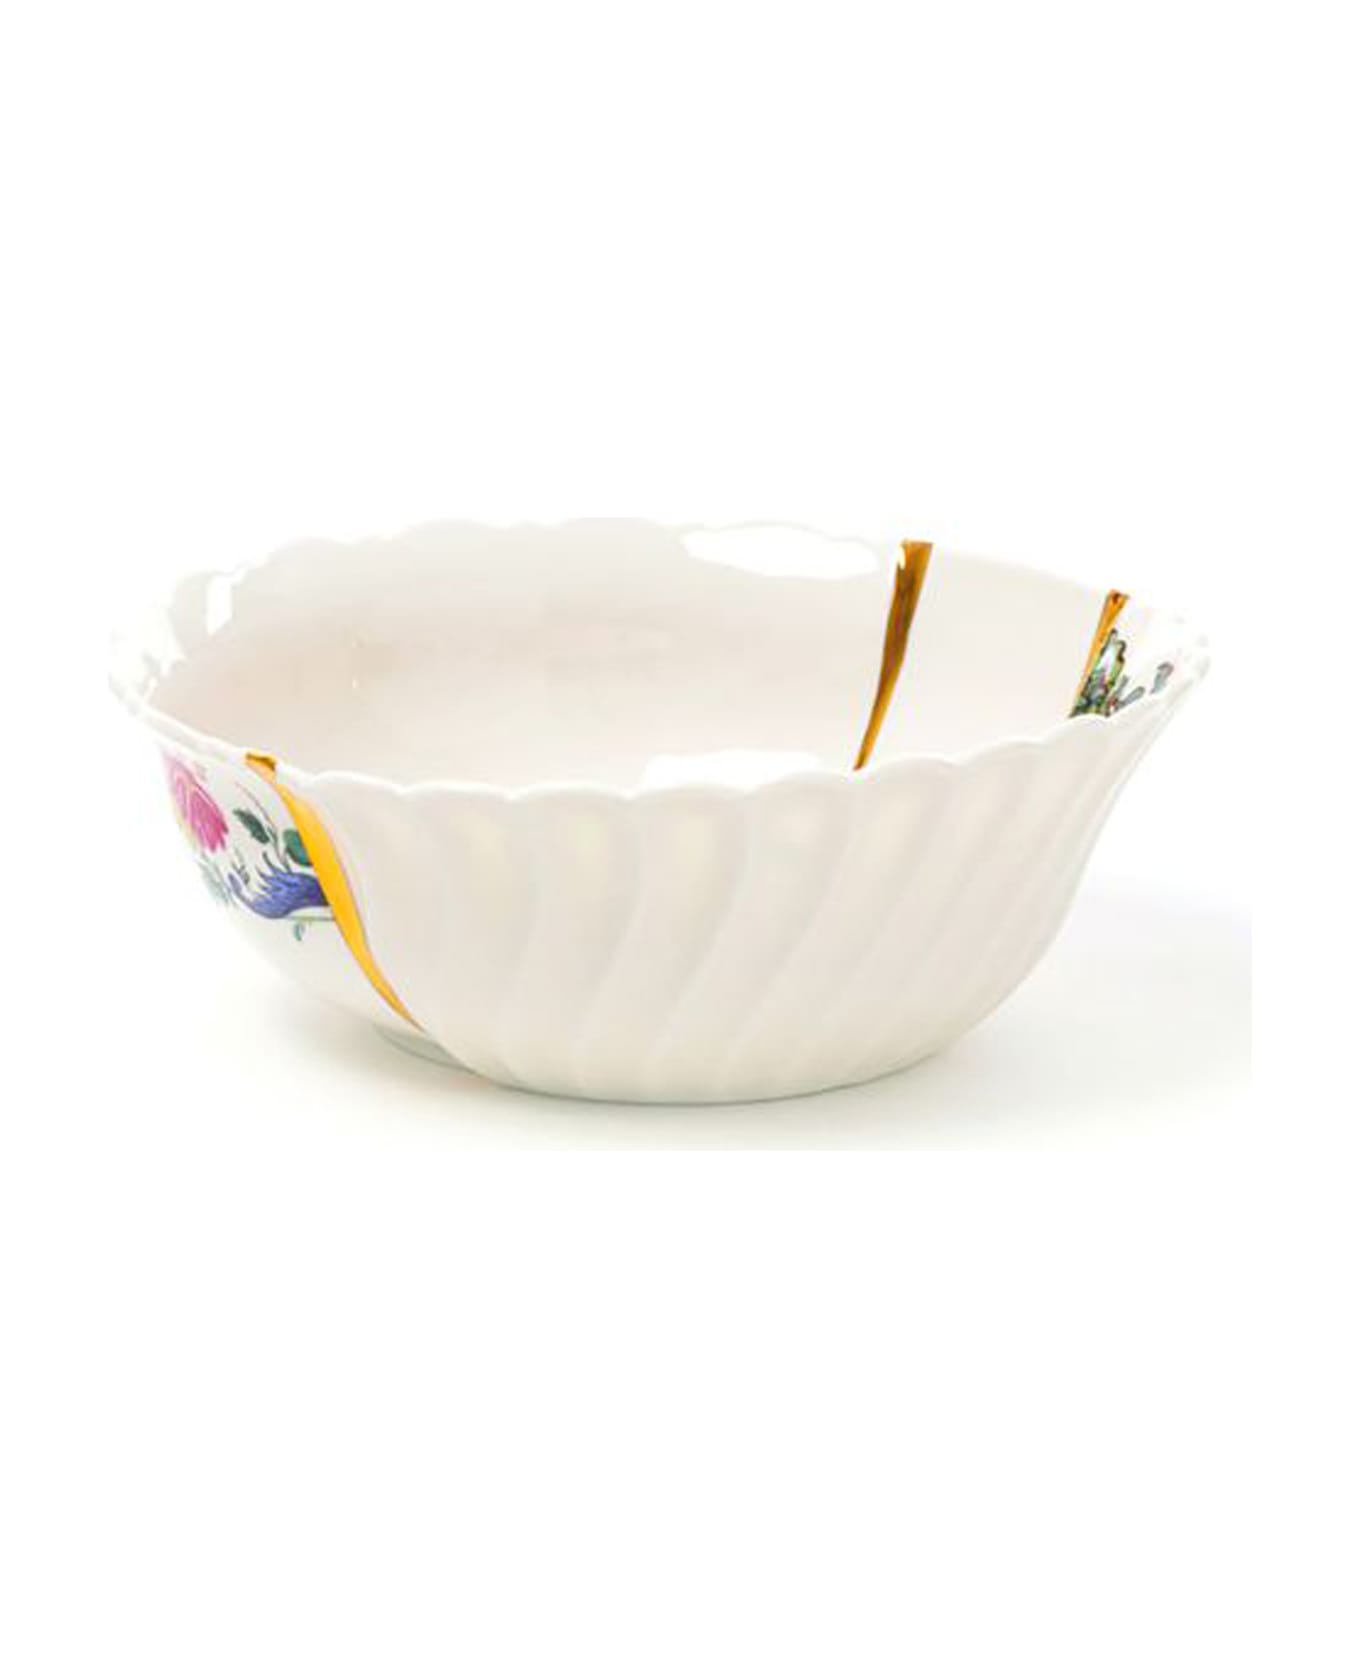 Seletti 'kintsugi' Large Bowl - Multicolor テーブルウェア